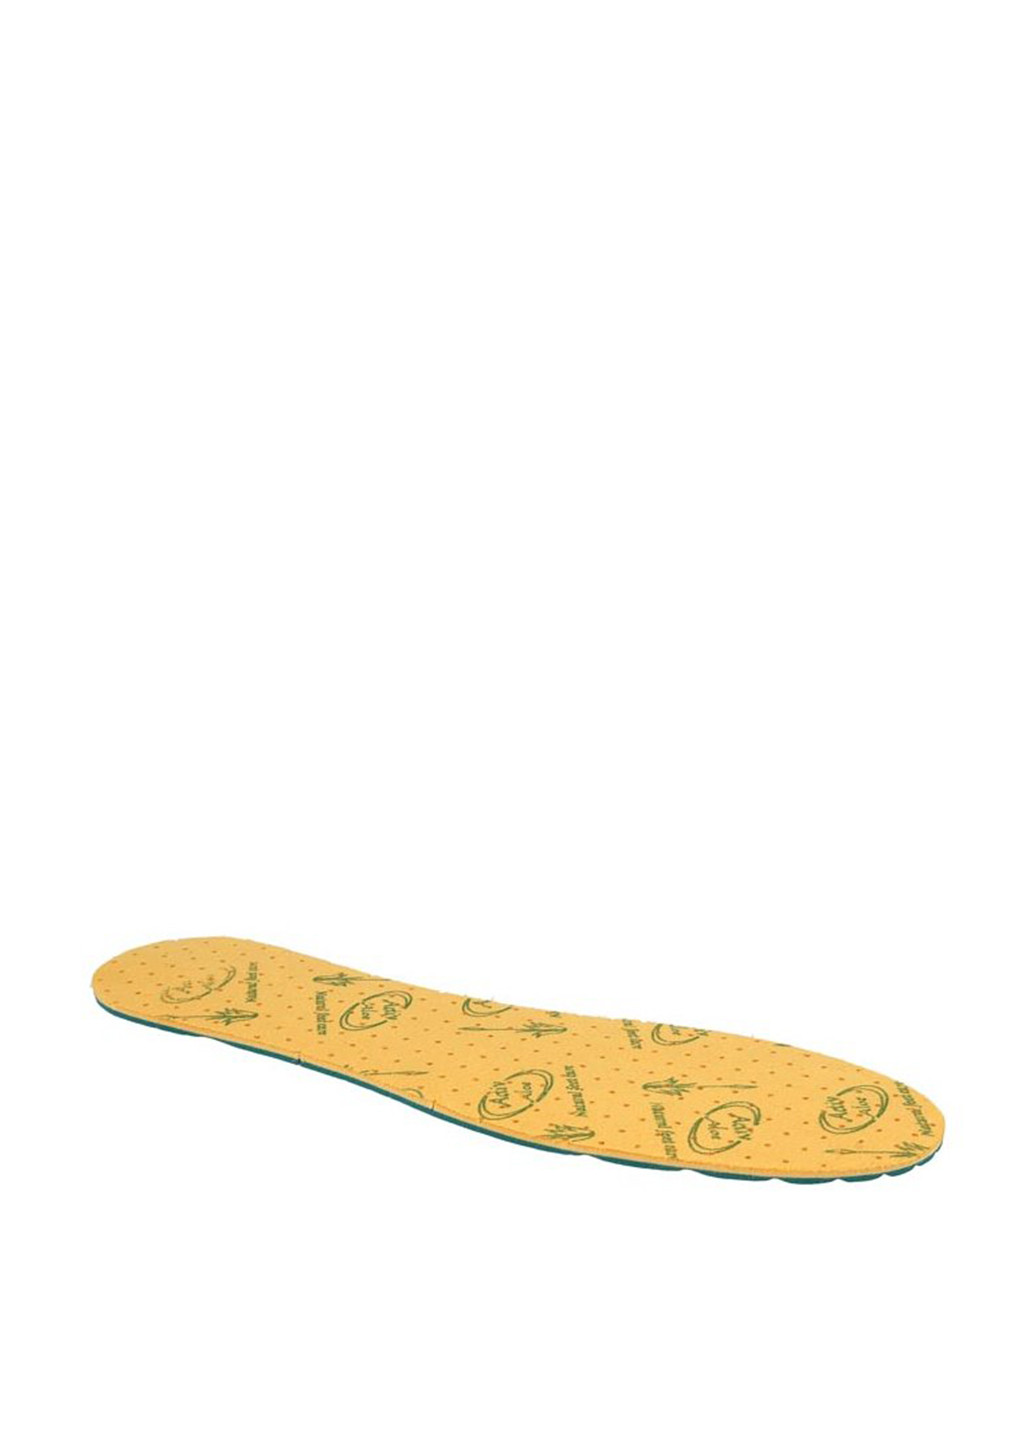 Устілки для взуття ALOE VERA NR 41-42/NG Coccine рисунки жёлтые